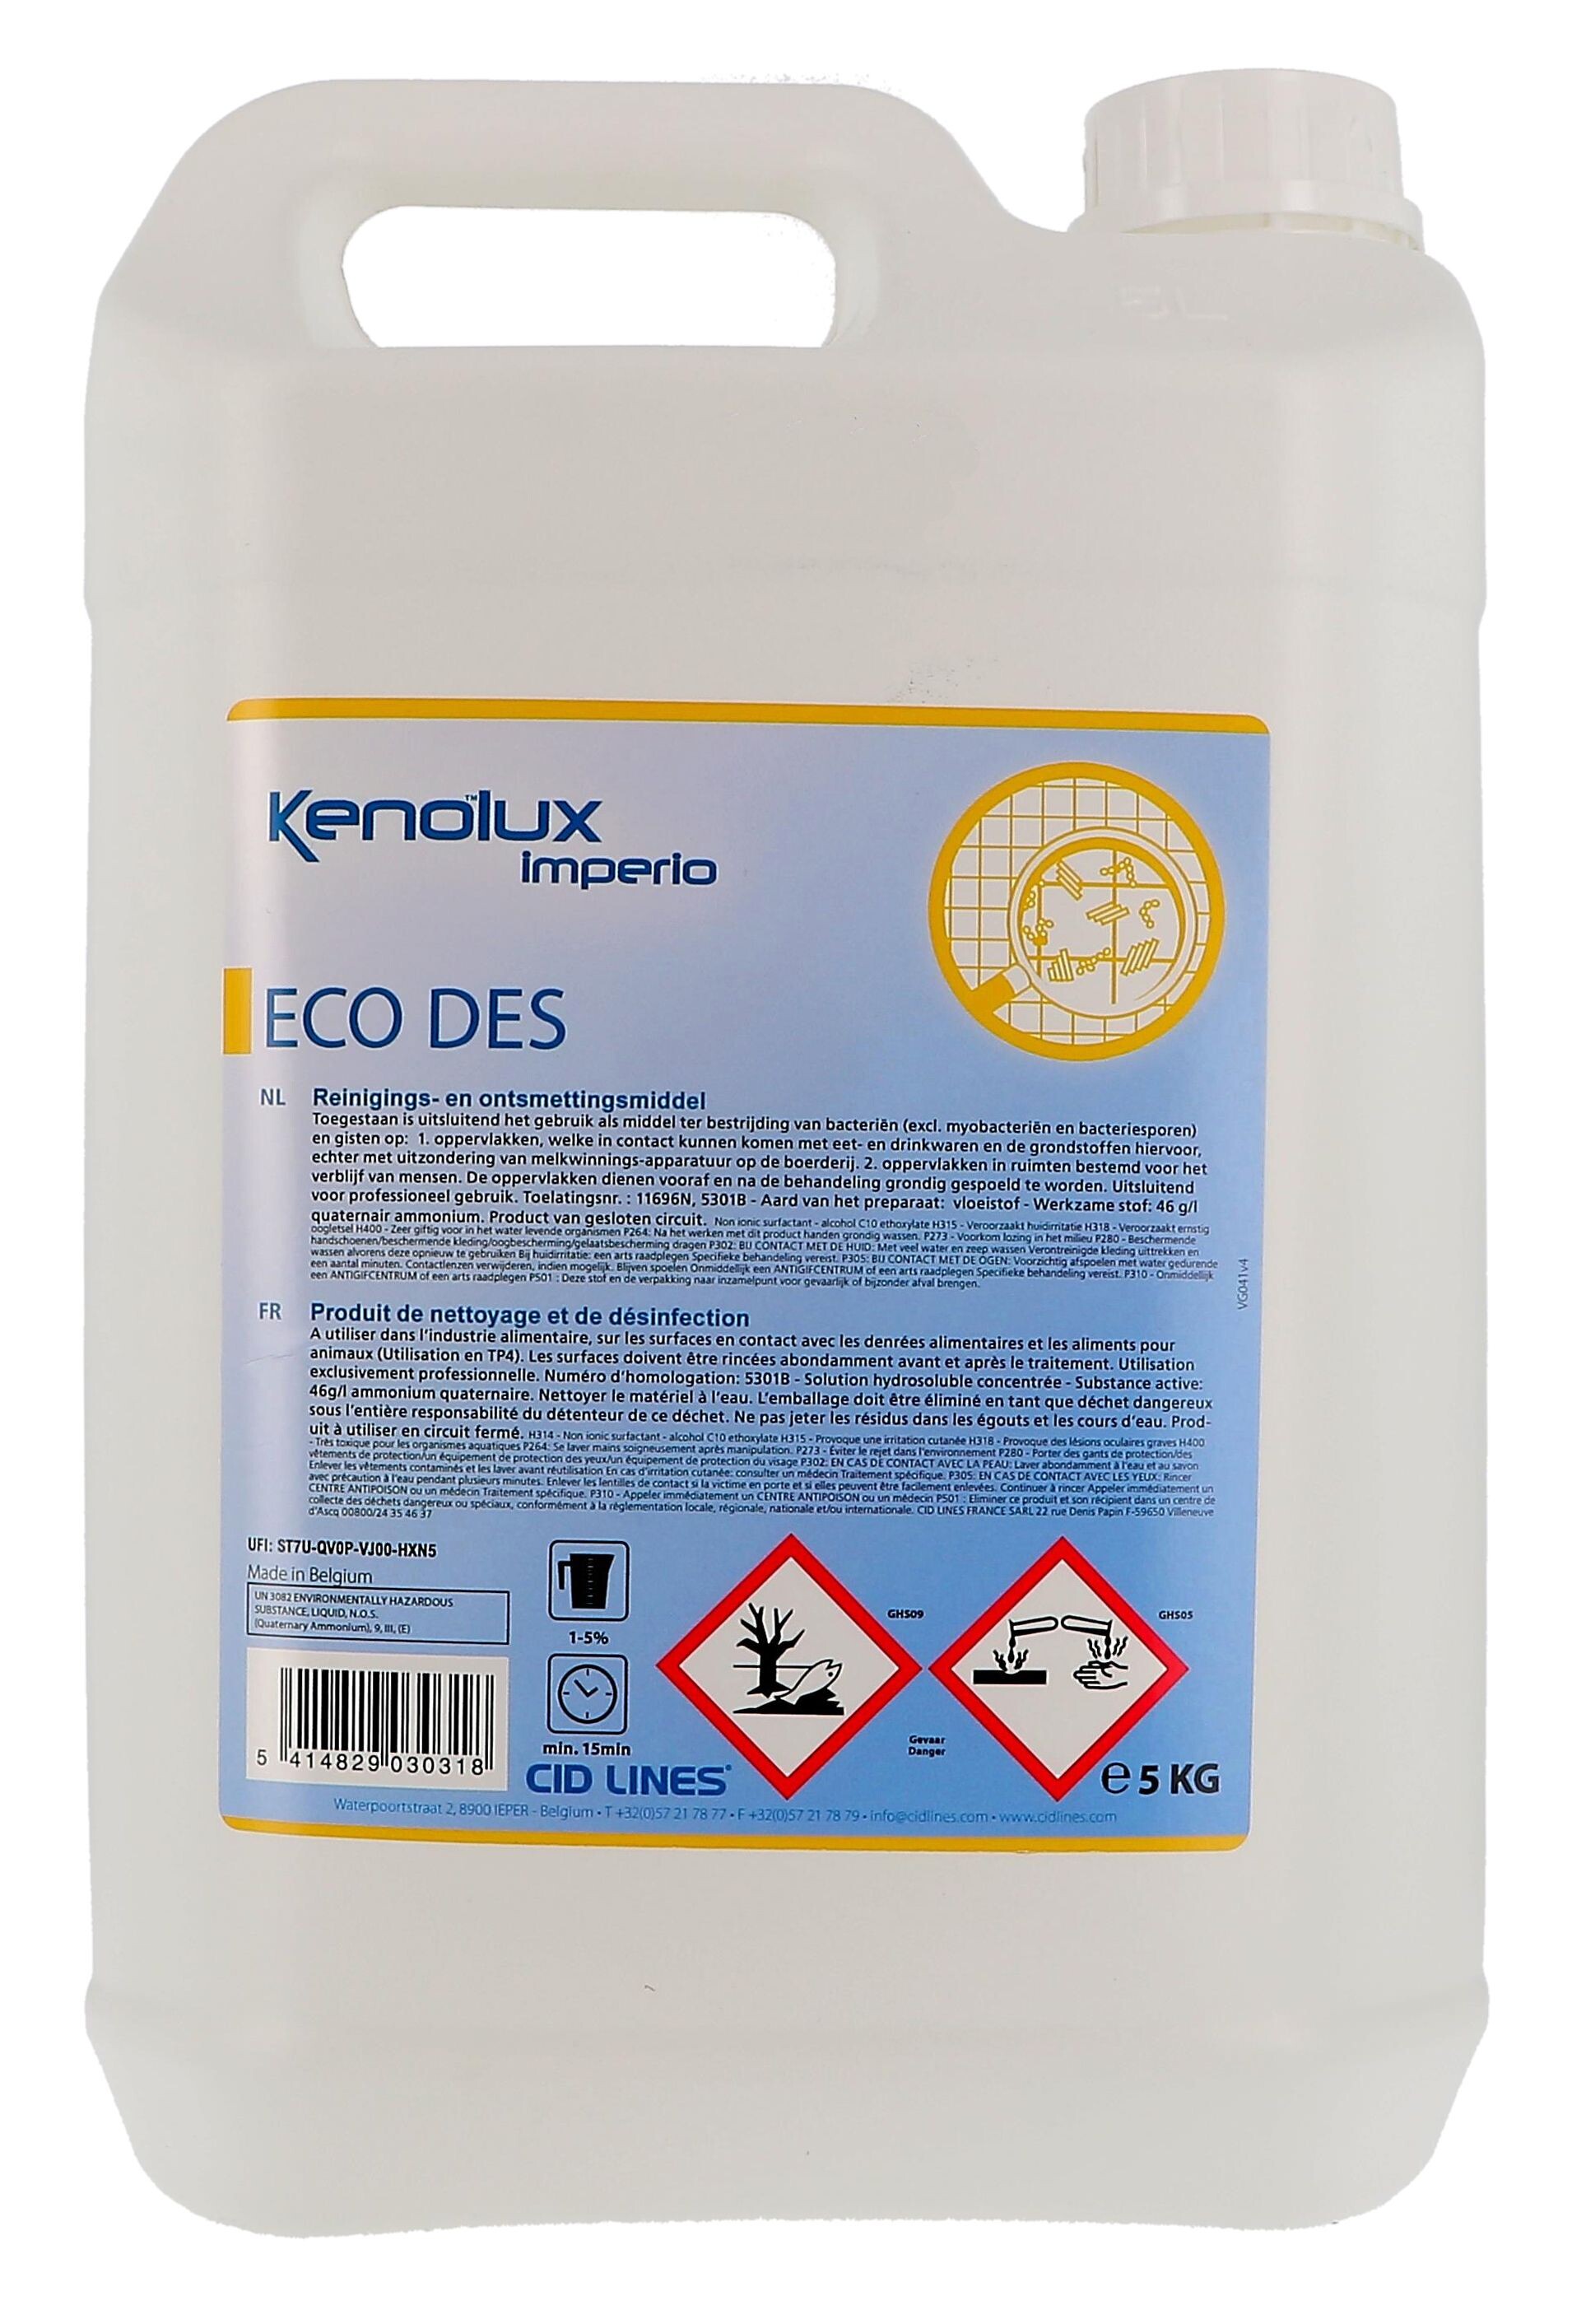 Kenolux Eco Des Cleaning Disinfectant 5L Cid Lines